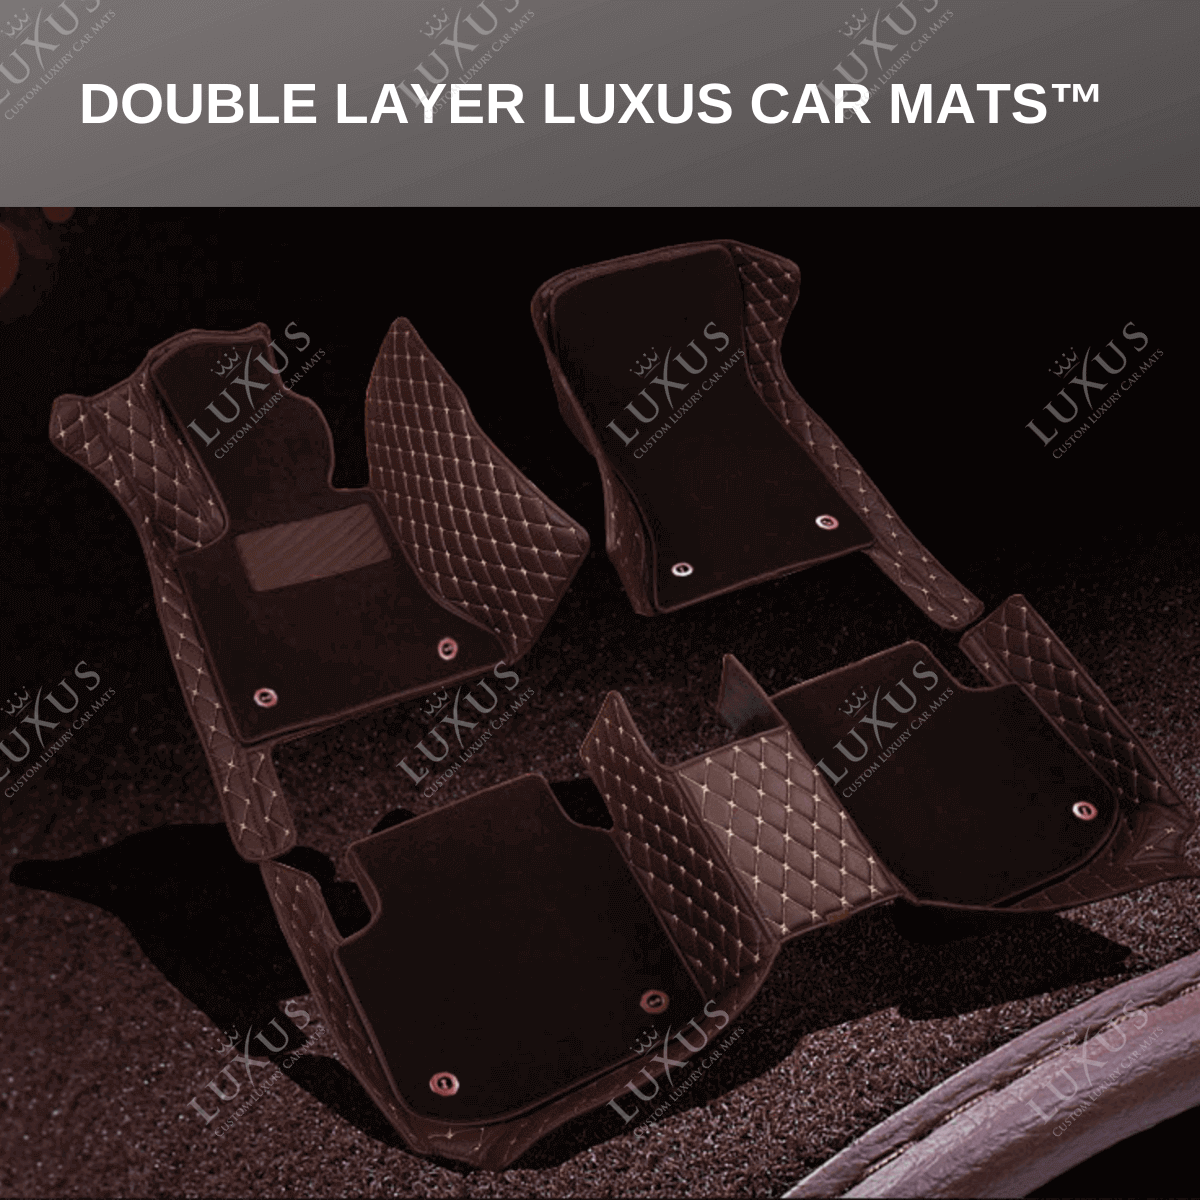 Black & Black Stitching Diamond Base & Beige Top Carpet Double Layer Luxury Car Mats Set